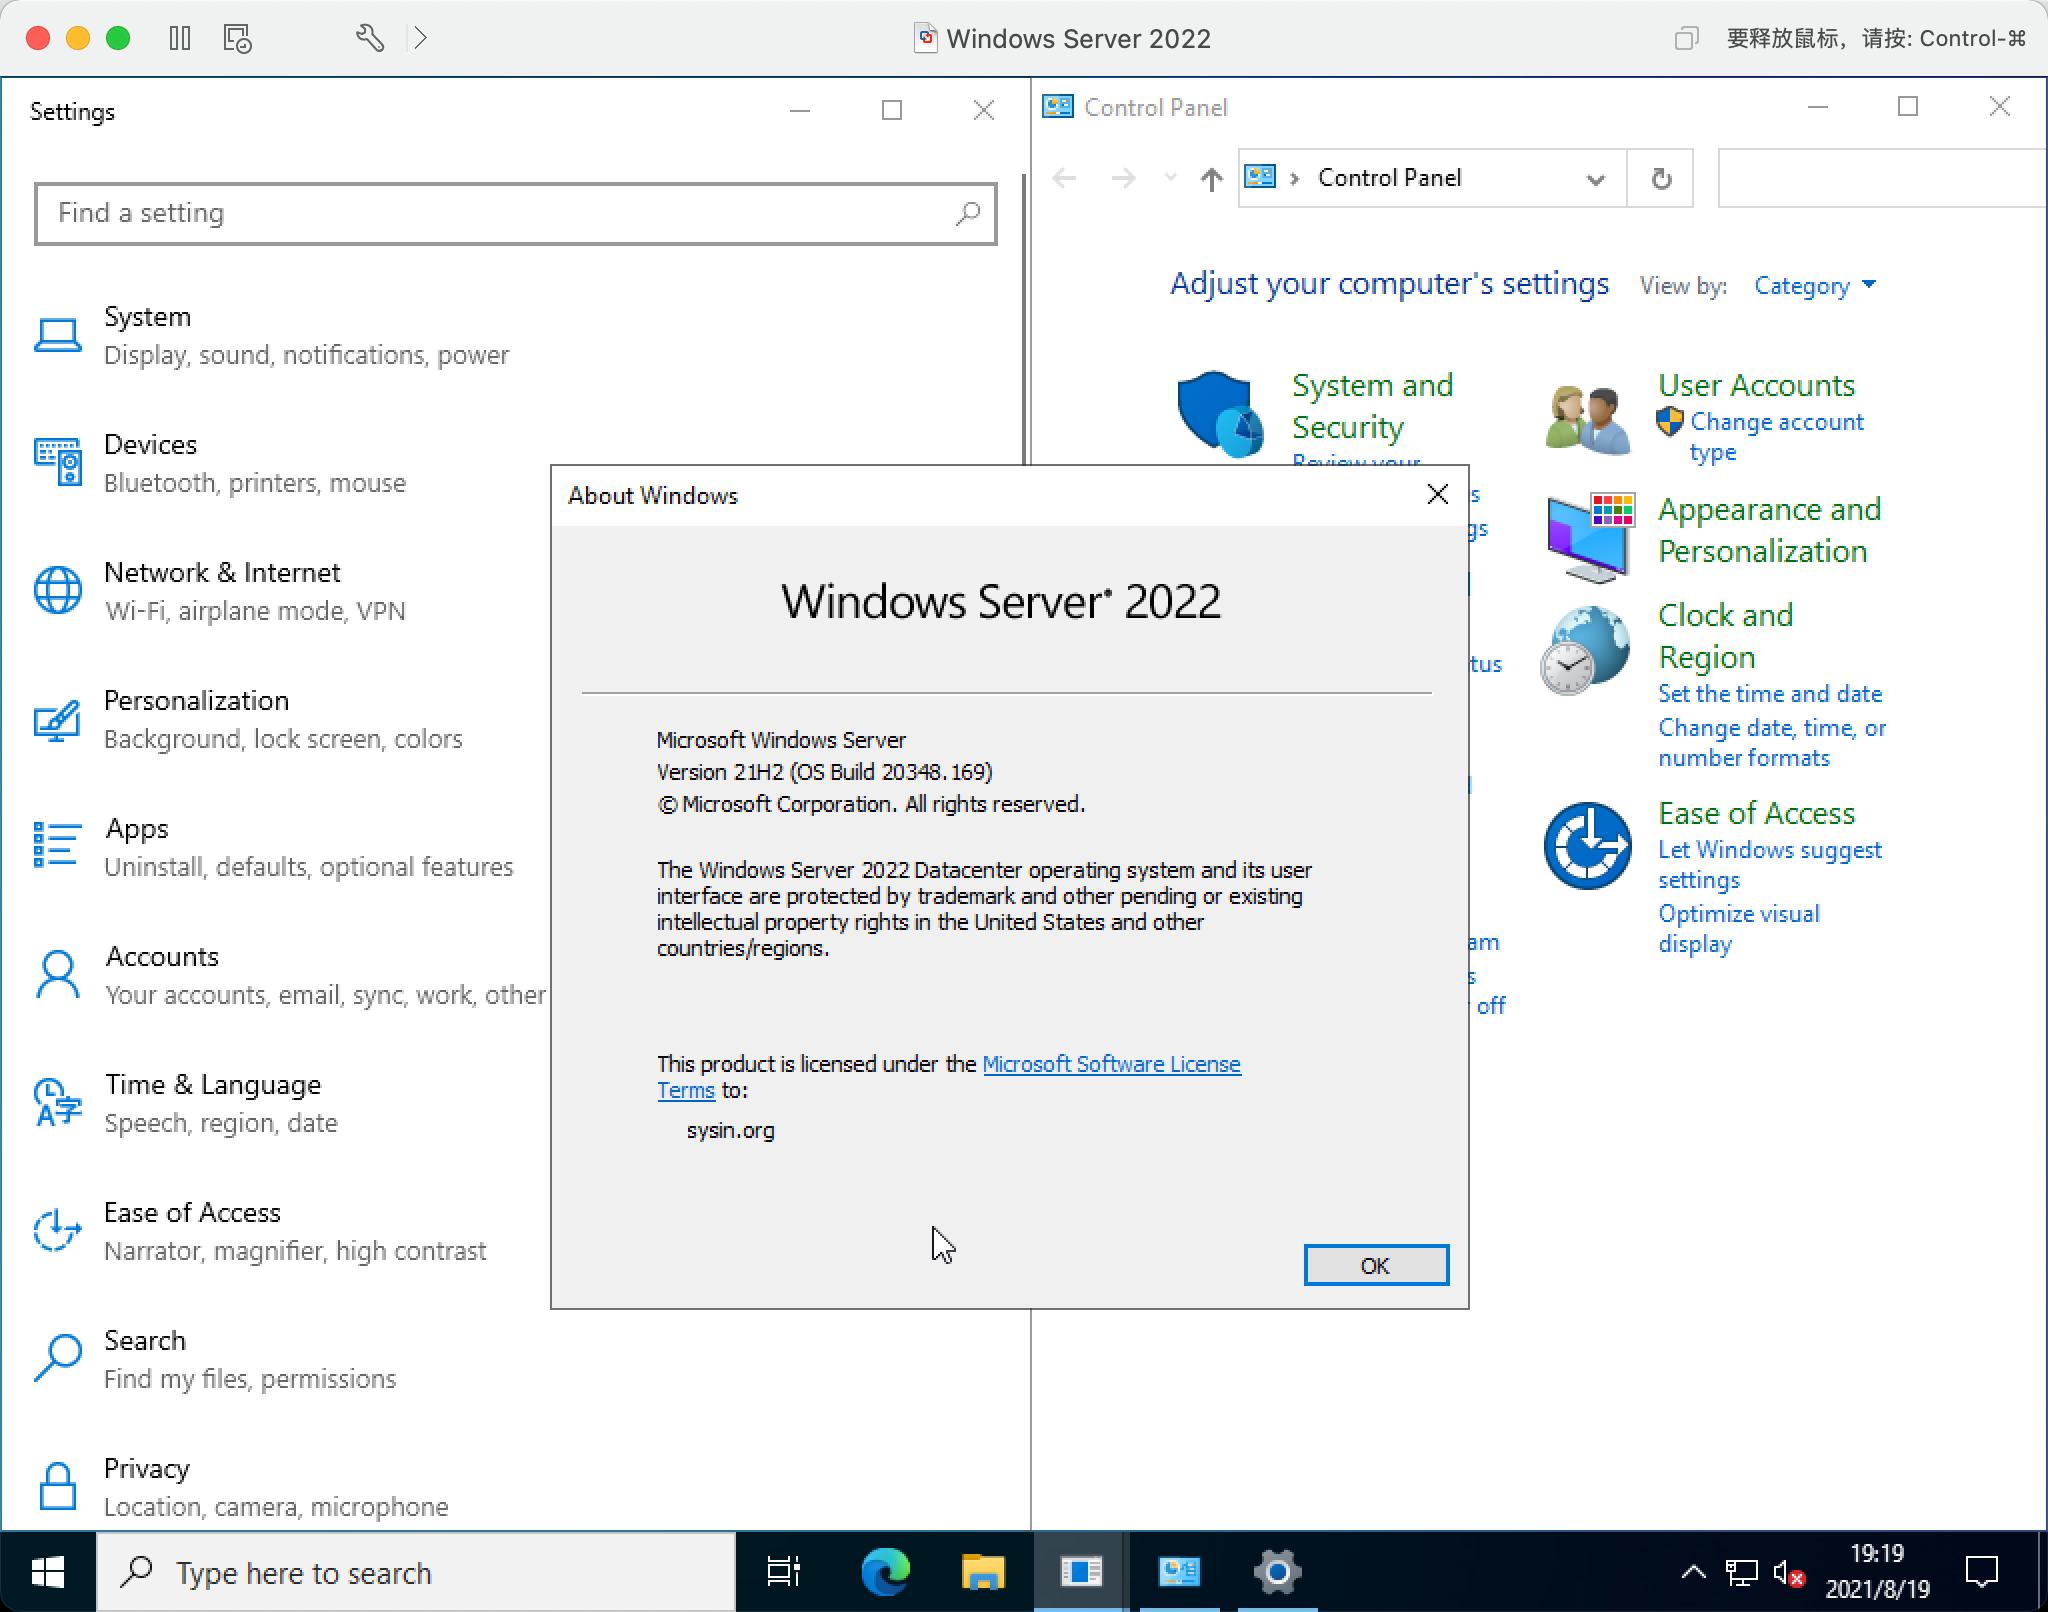 Interfaz de Windows Server 2022 de un vistazo